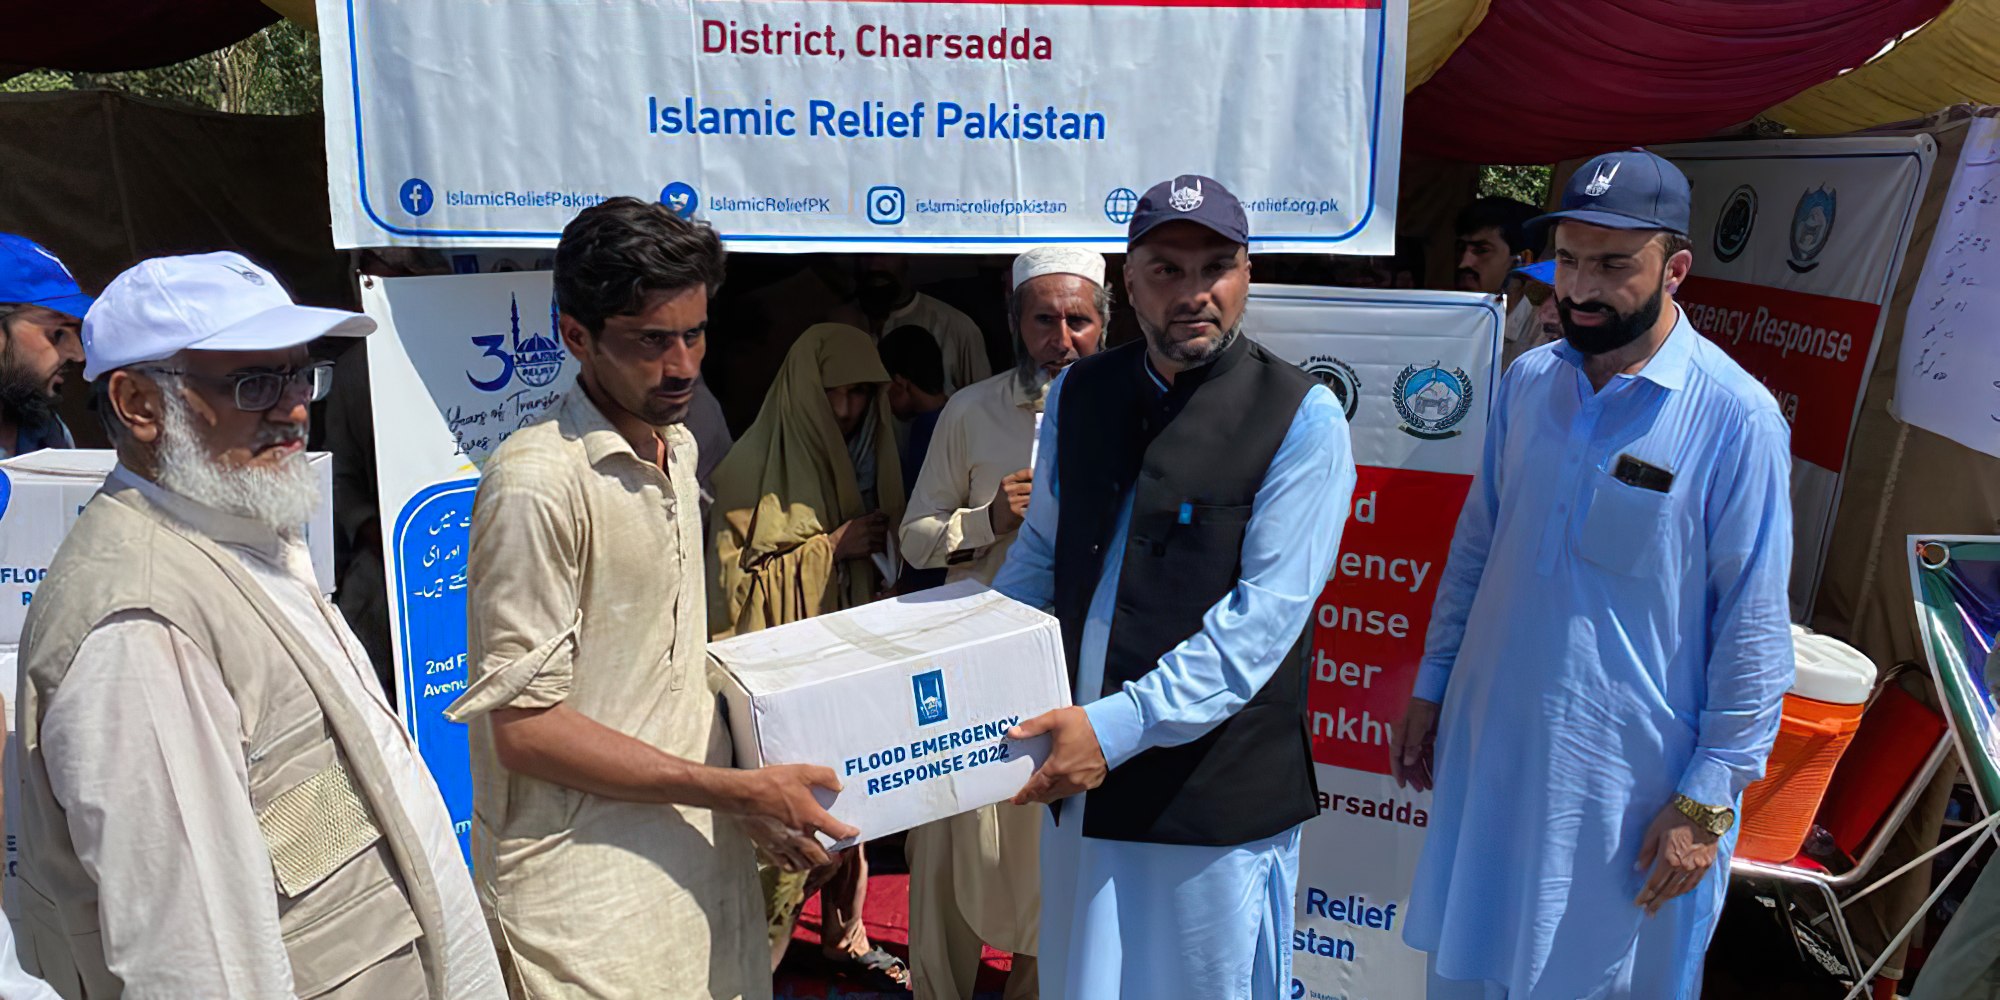 Islamic Relief Worldwide CEO reports ‘unforgettable scenes of suffering’ in Pakistan floods